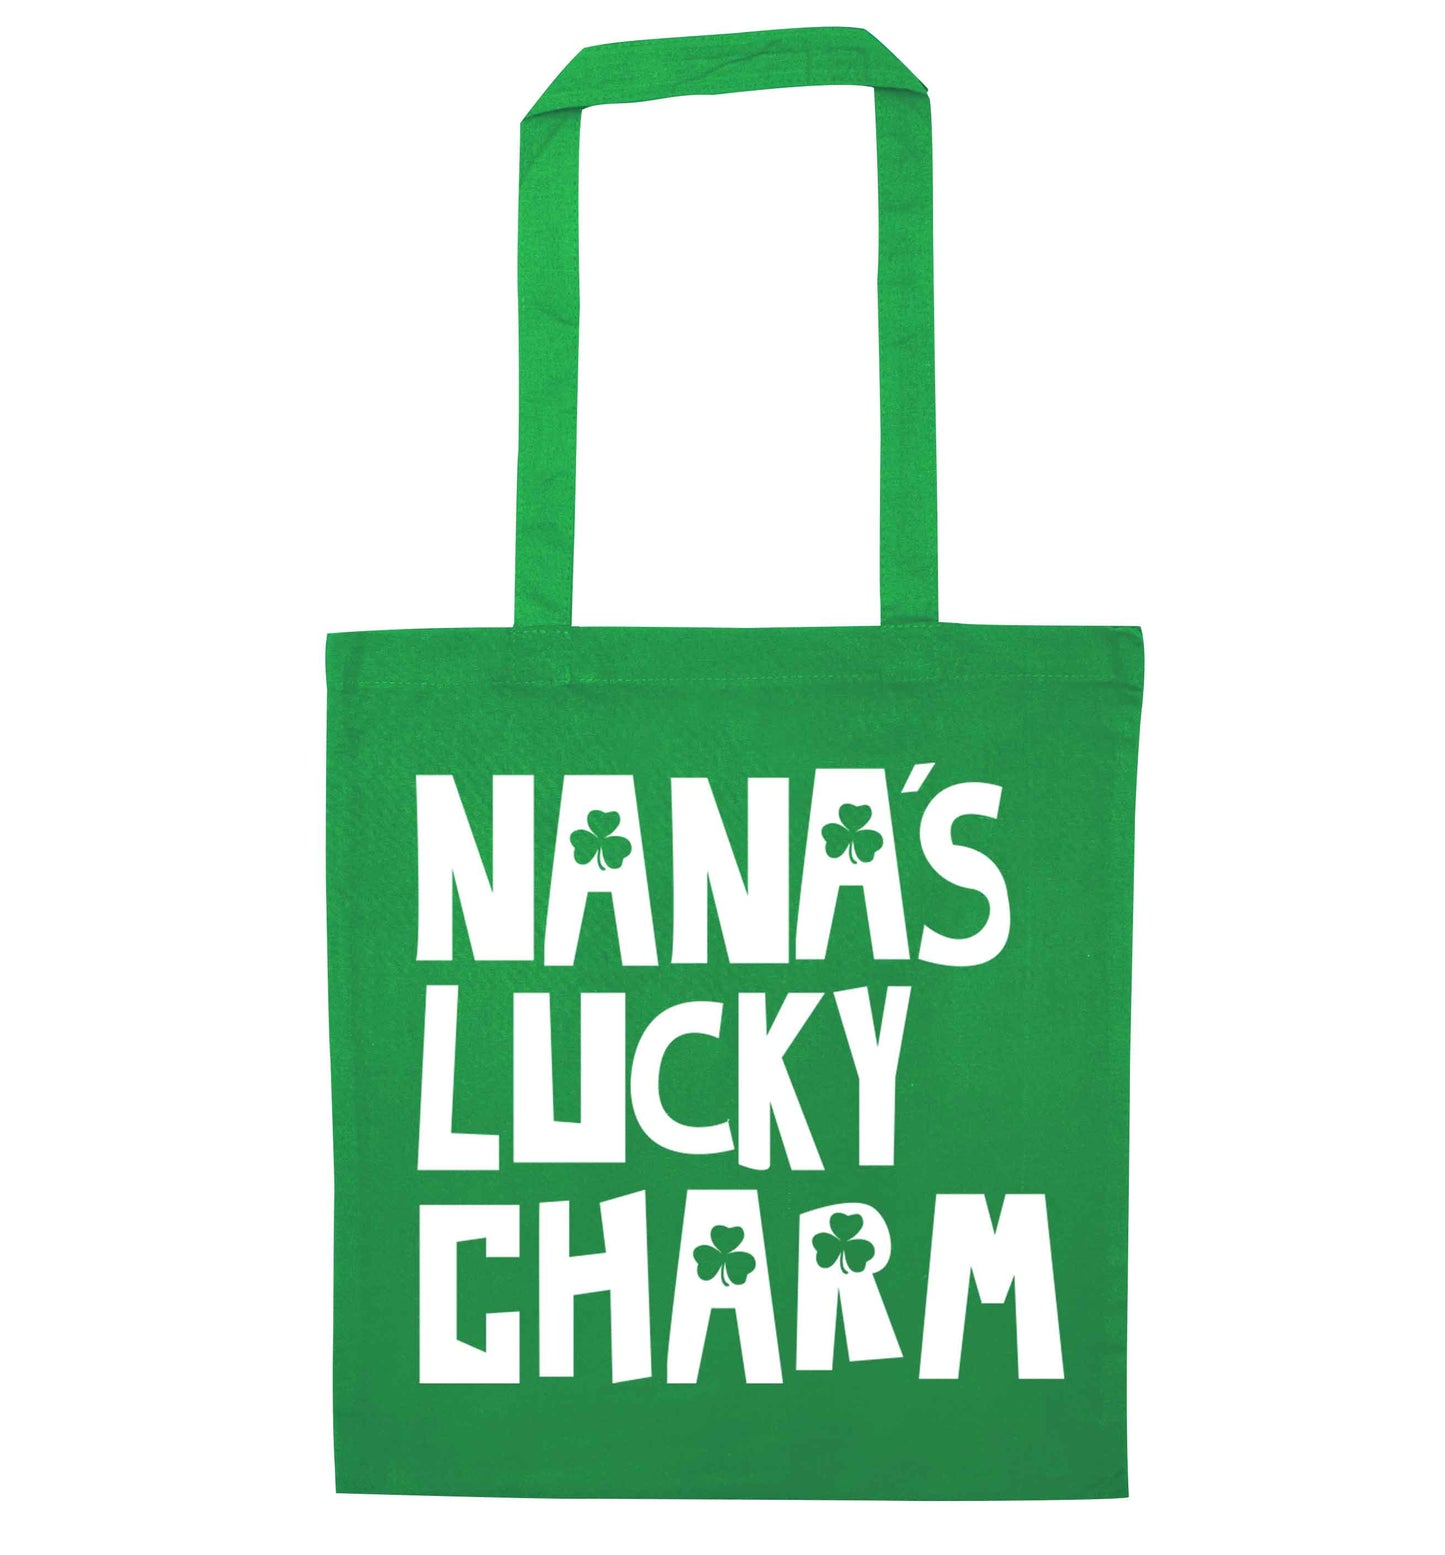 Nana's lucky charm green tote bag